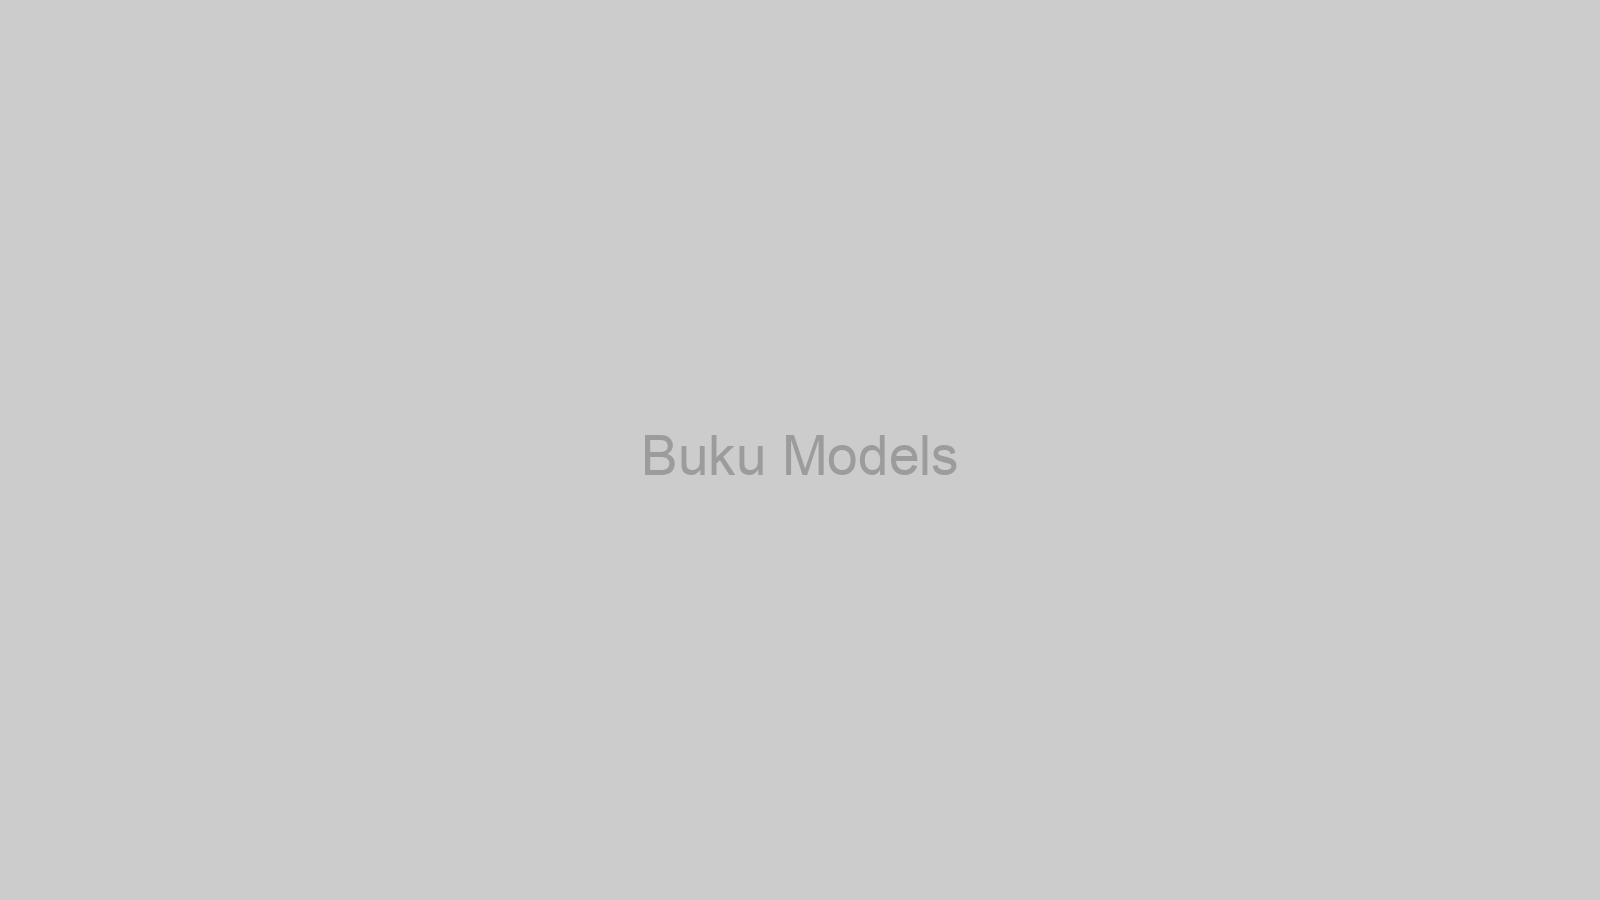 Buku Models